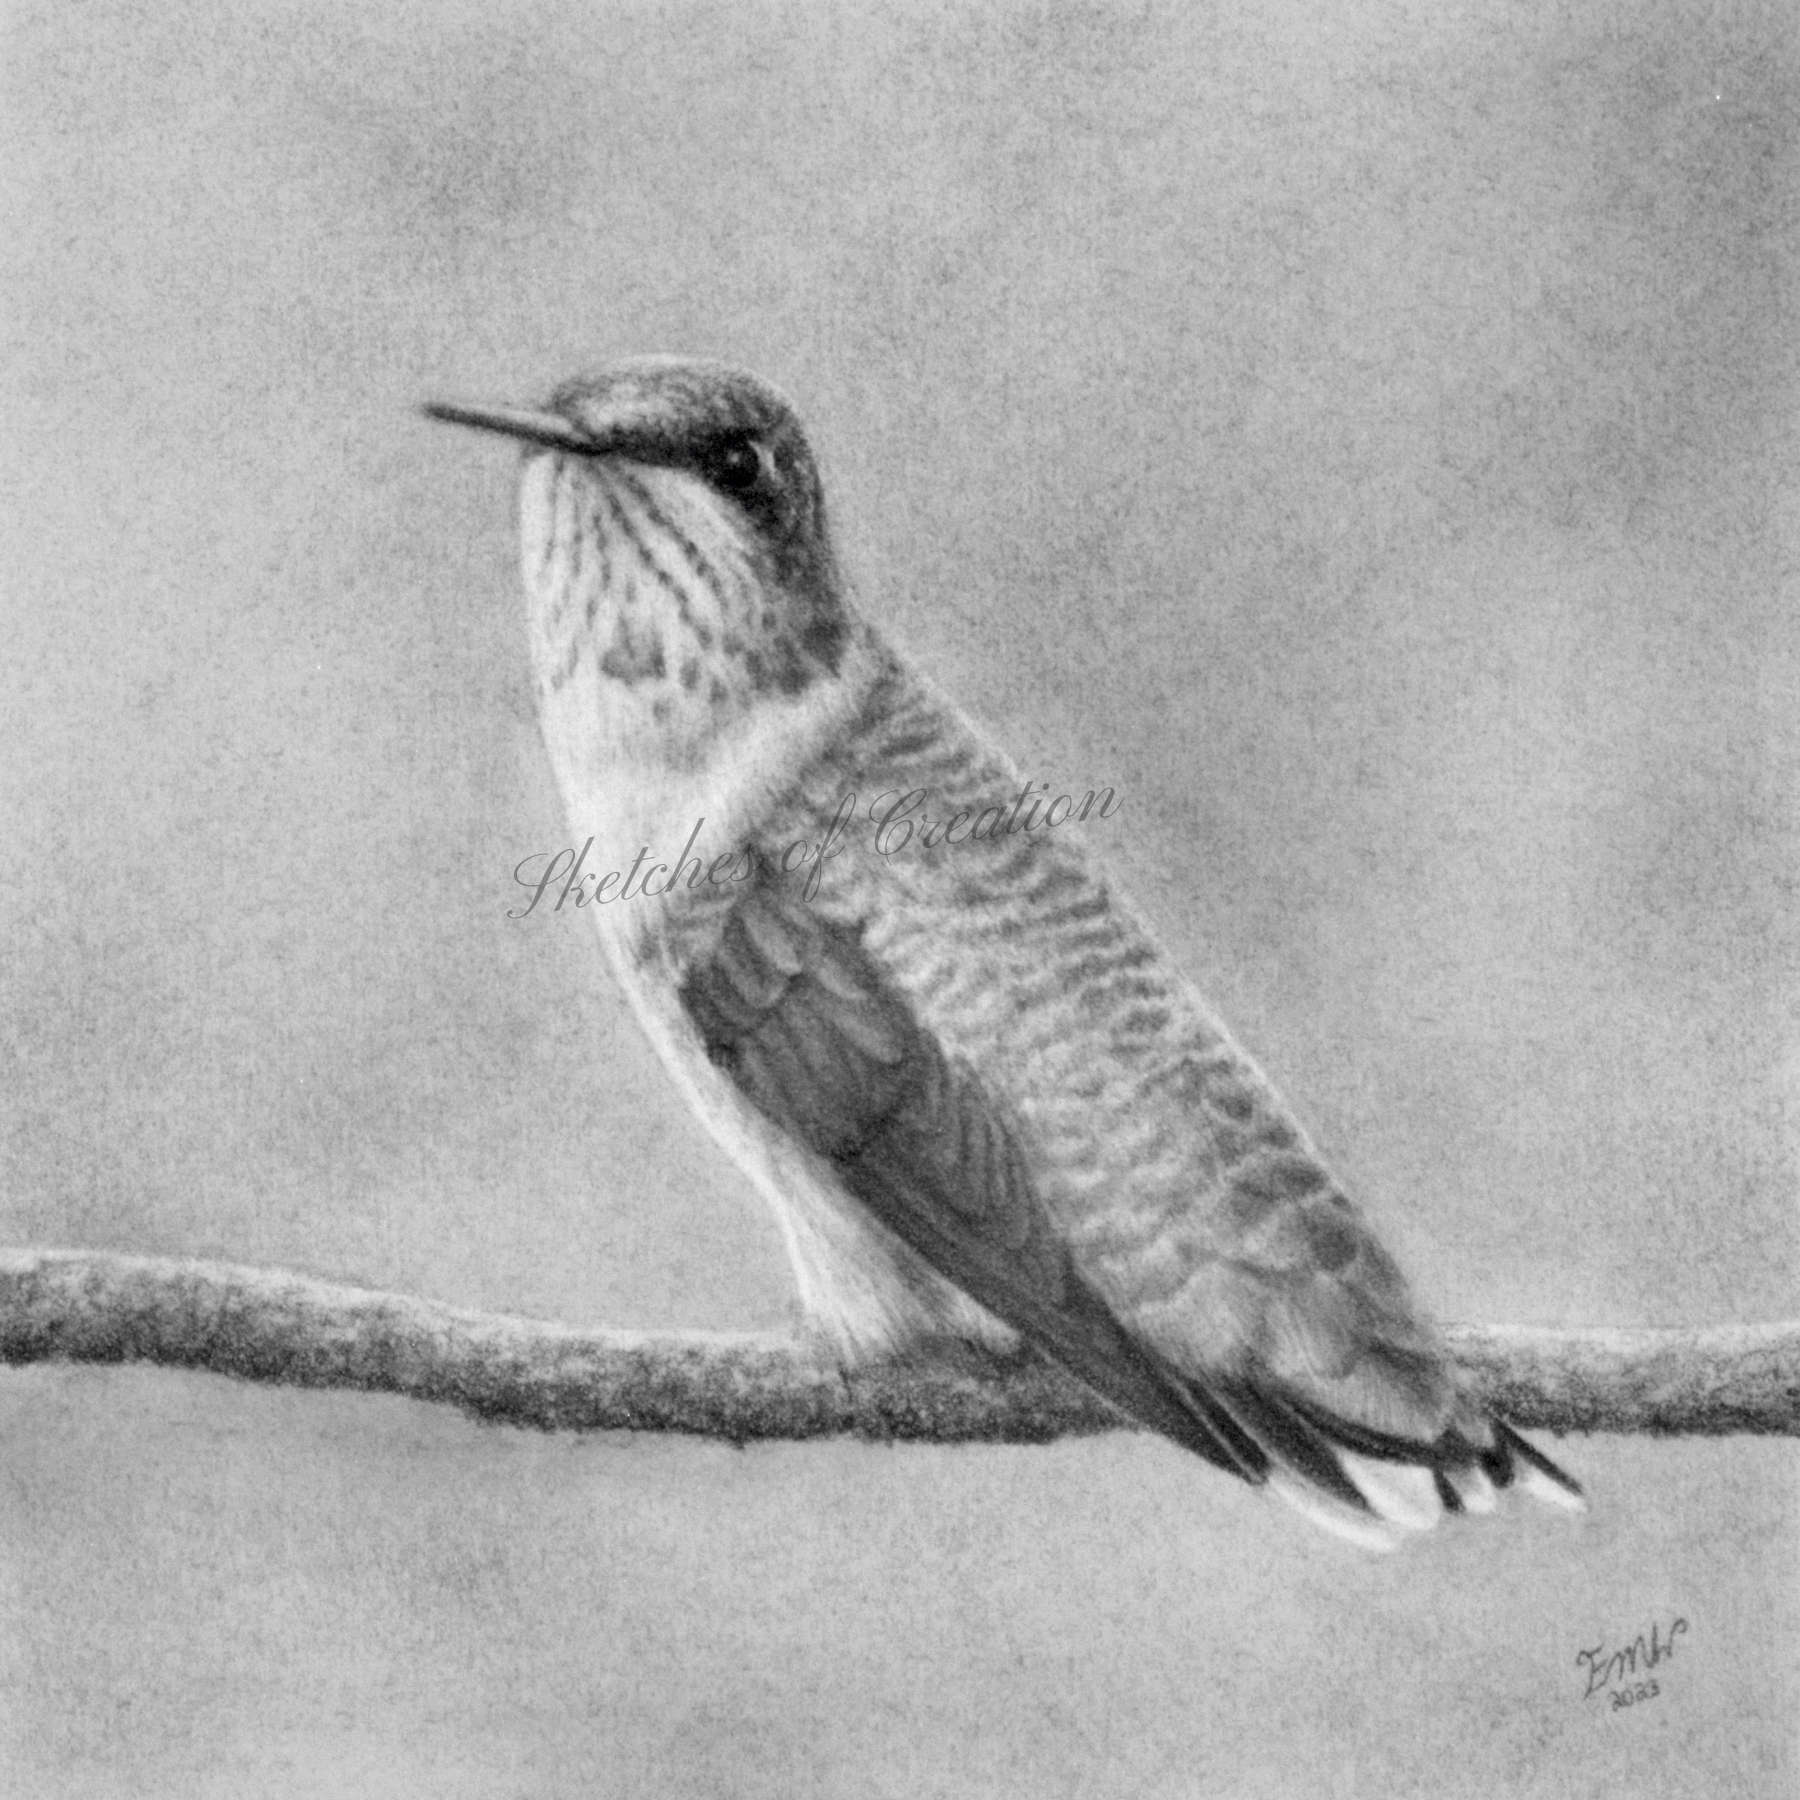 A drawing of a hummingbird